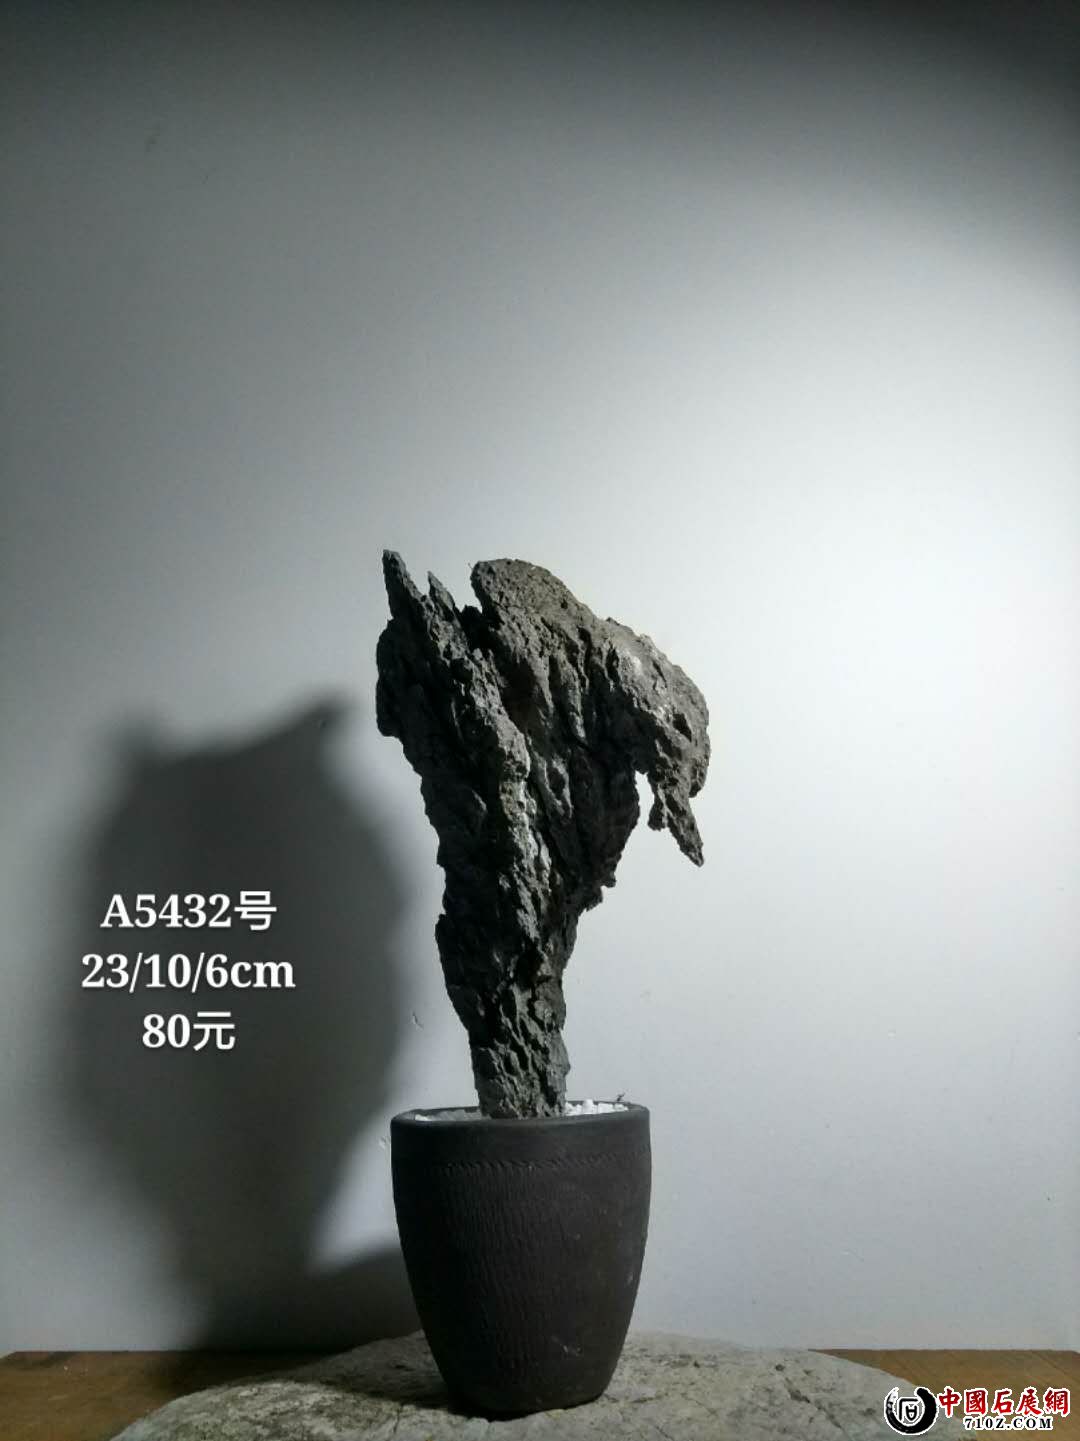 a5432.jpg